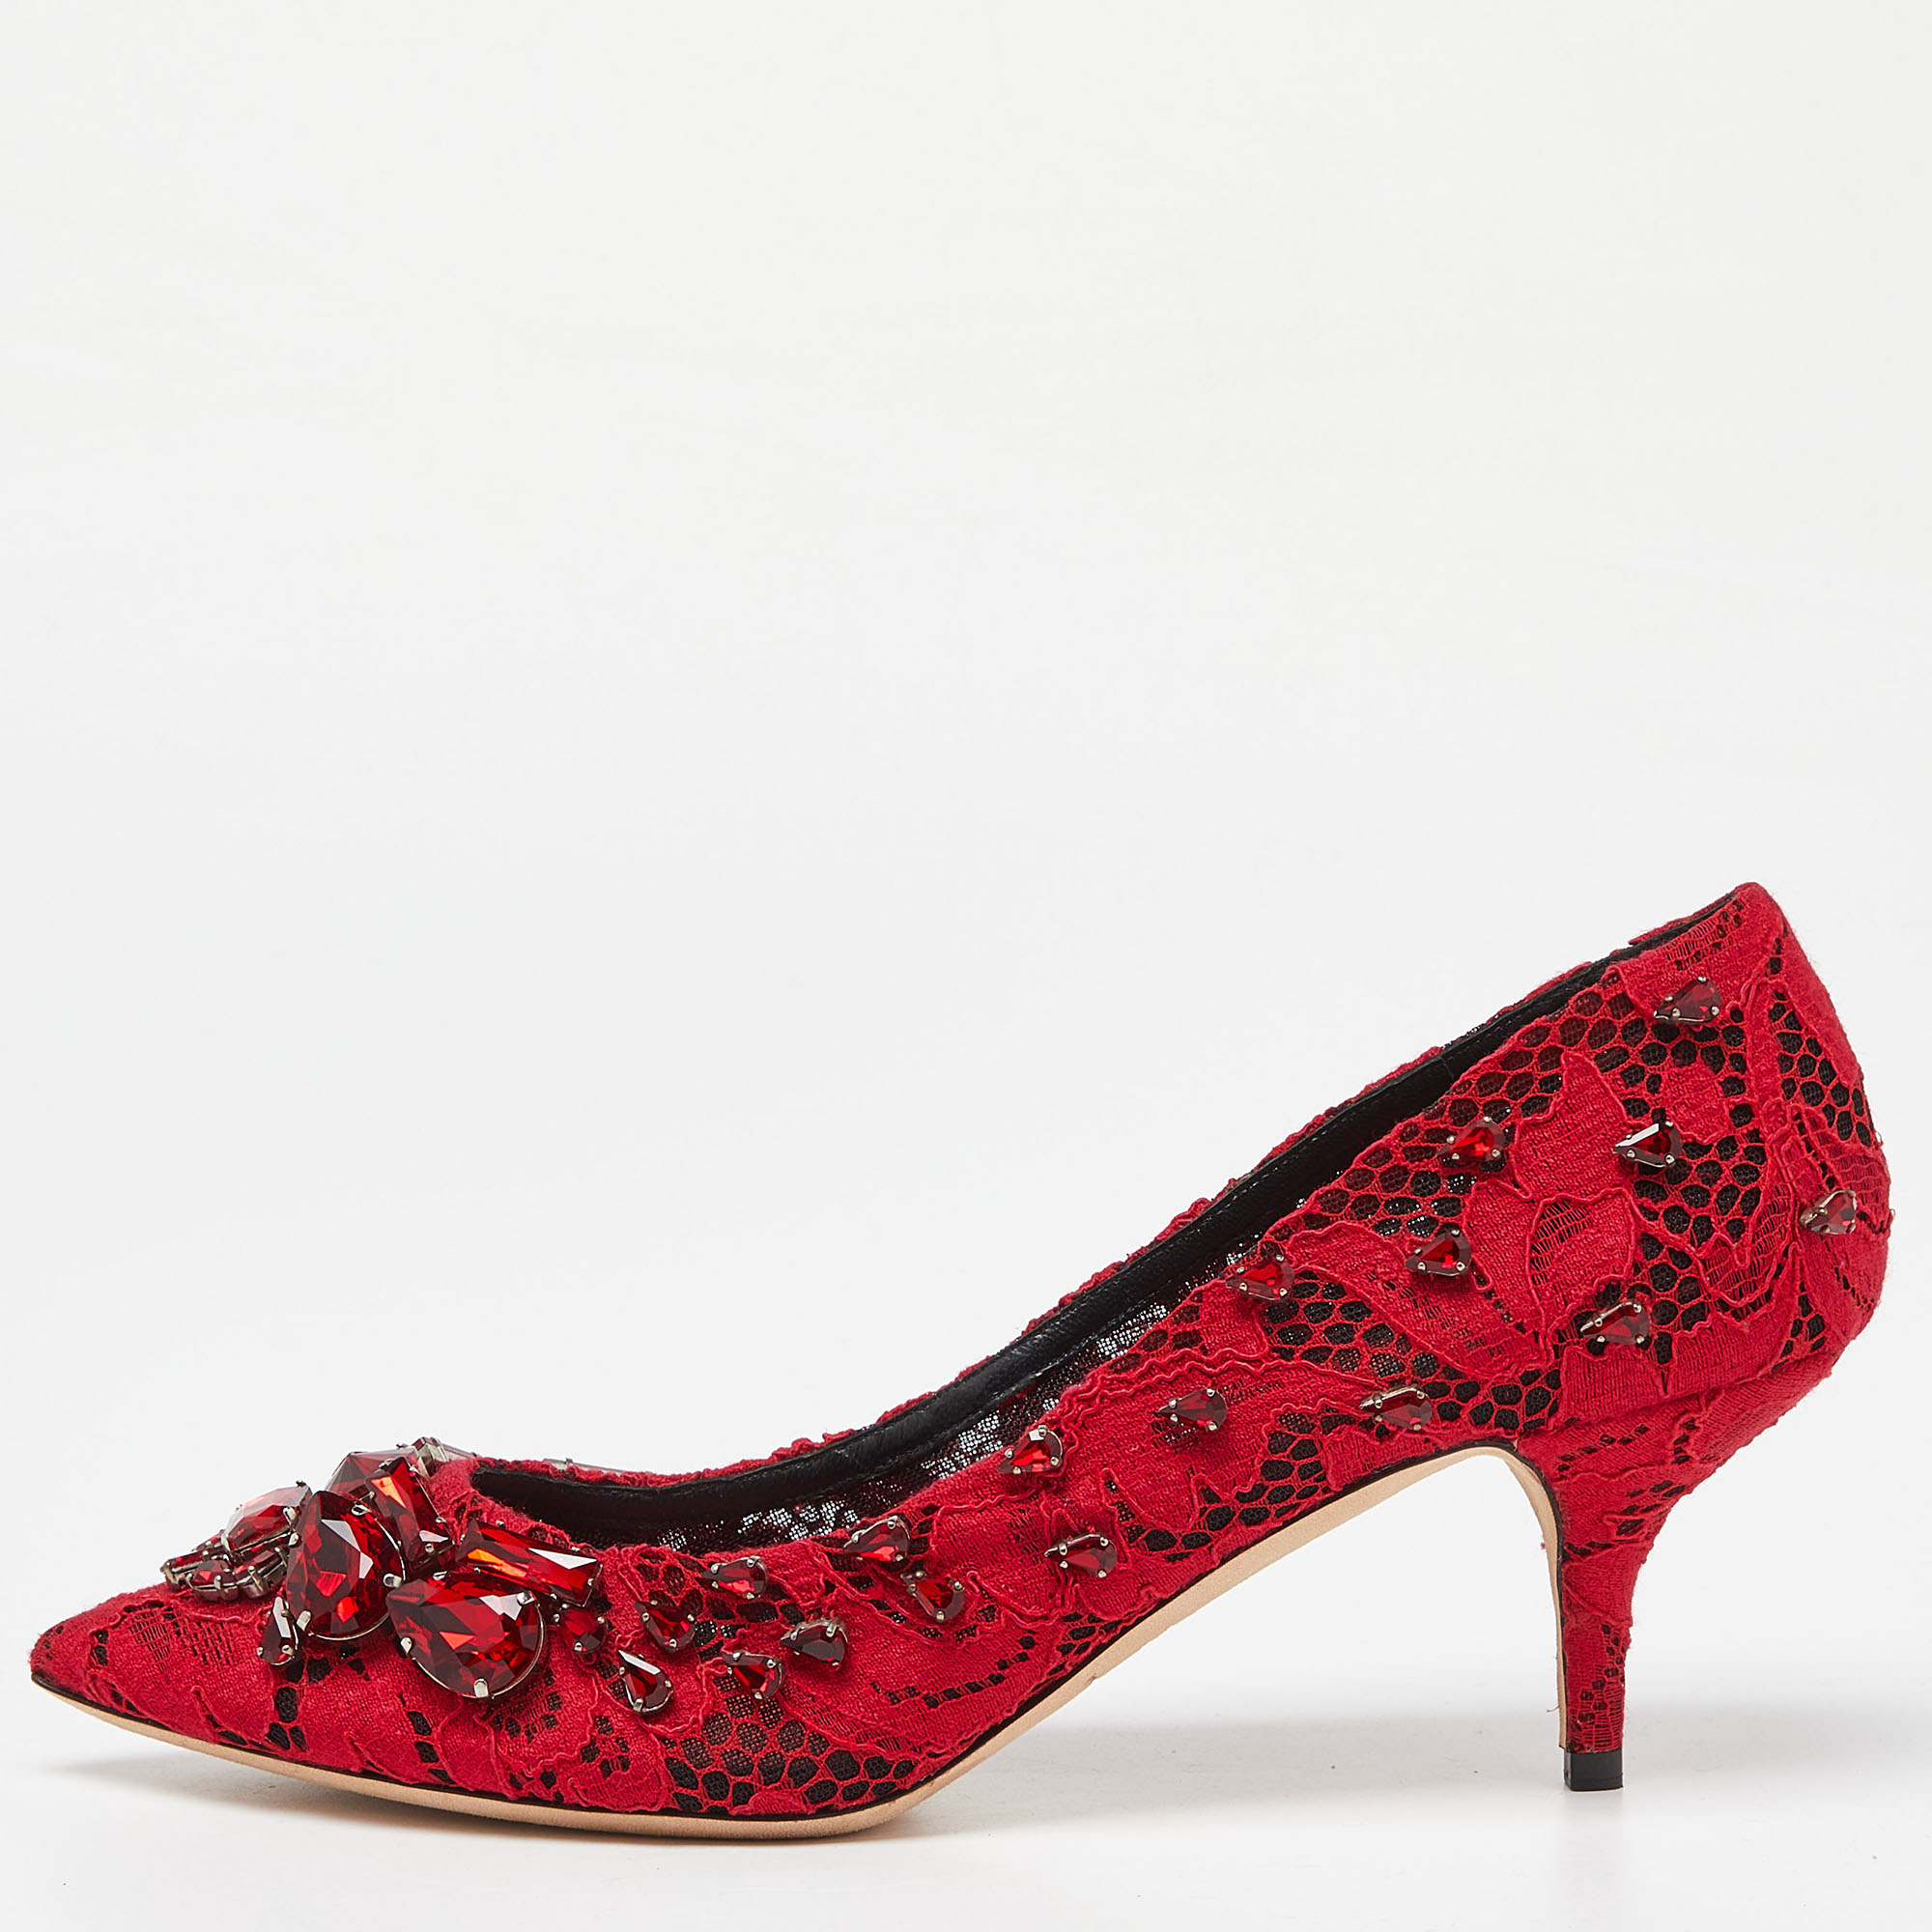 Dolce & gabbana red lace crystal embellished pumps size 41